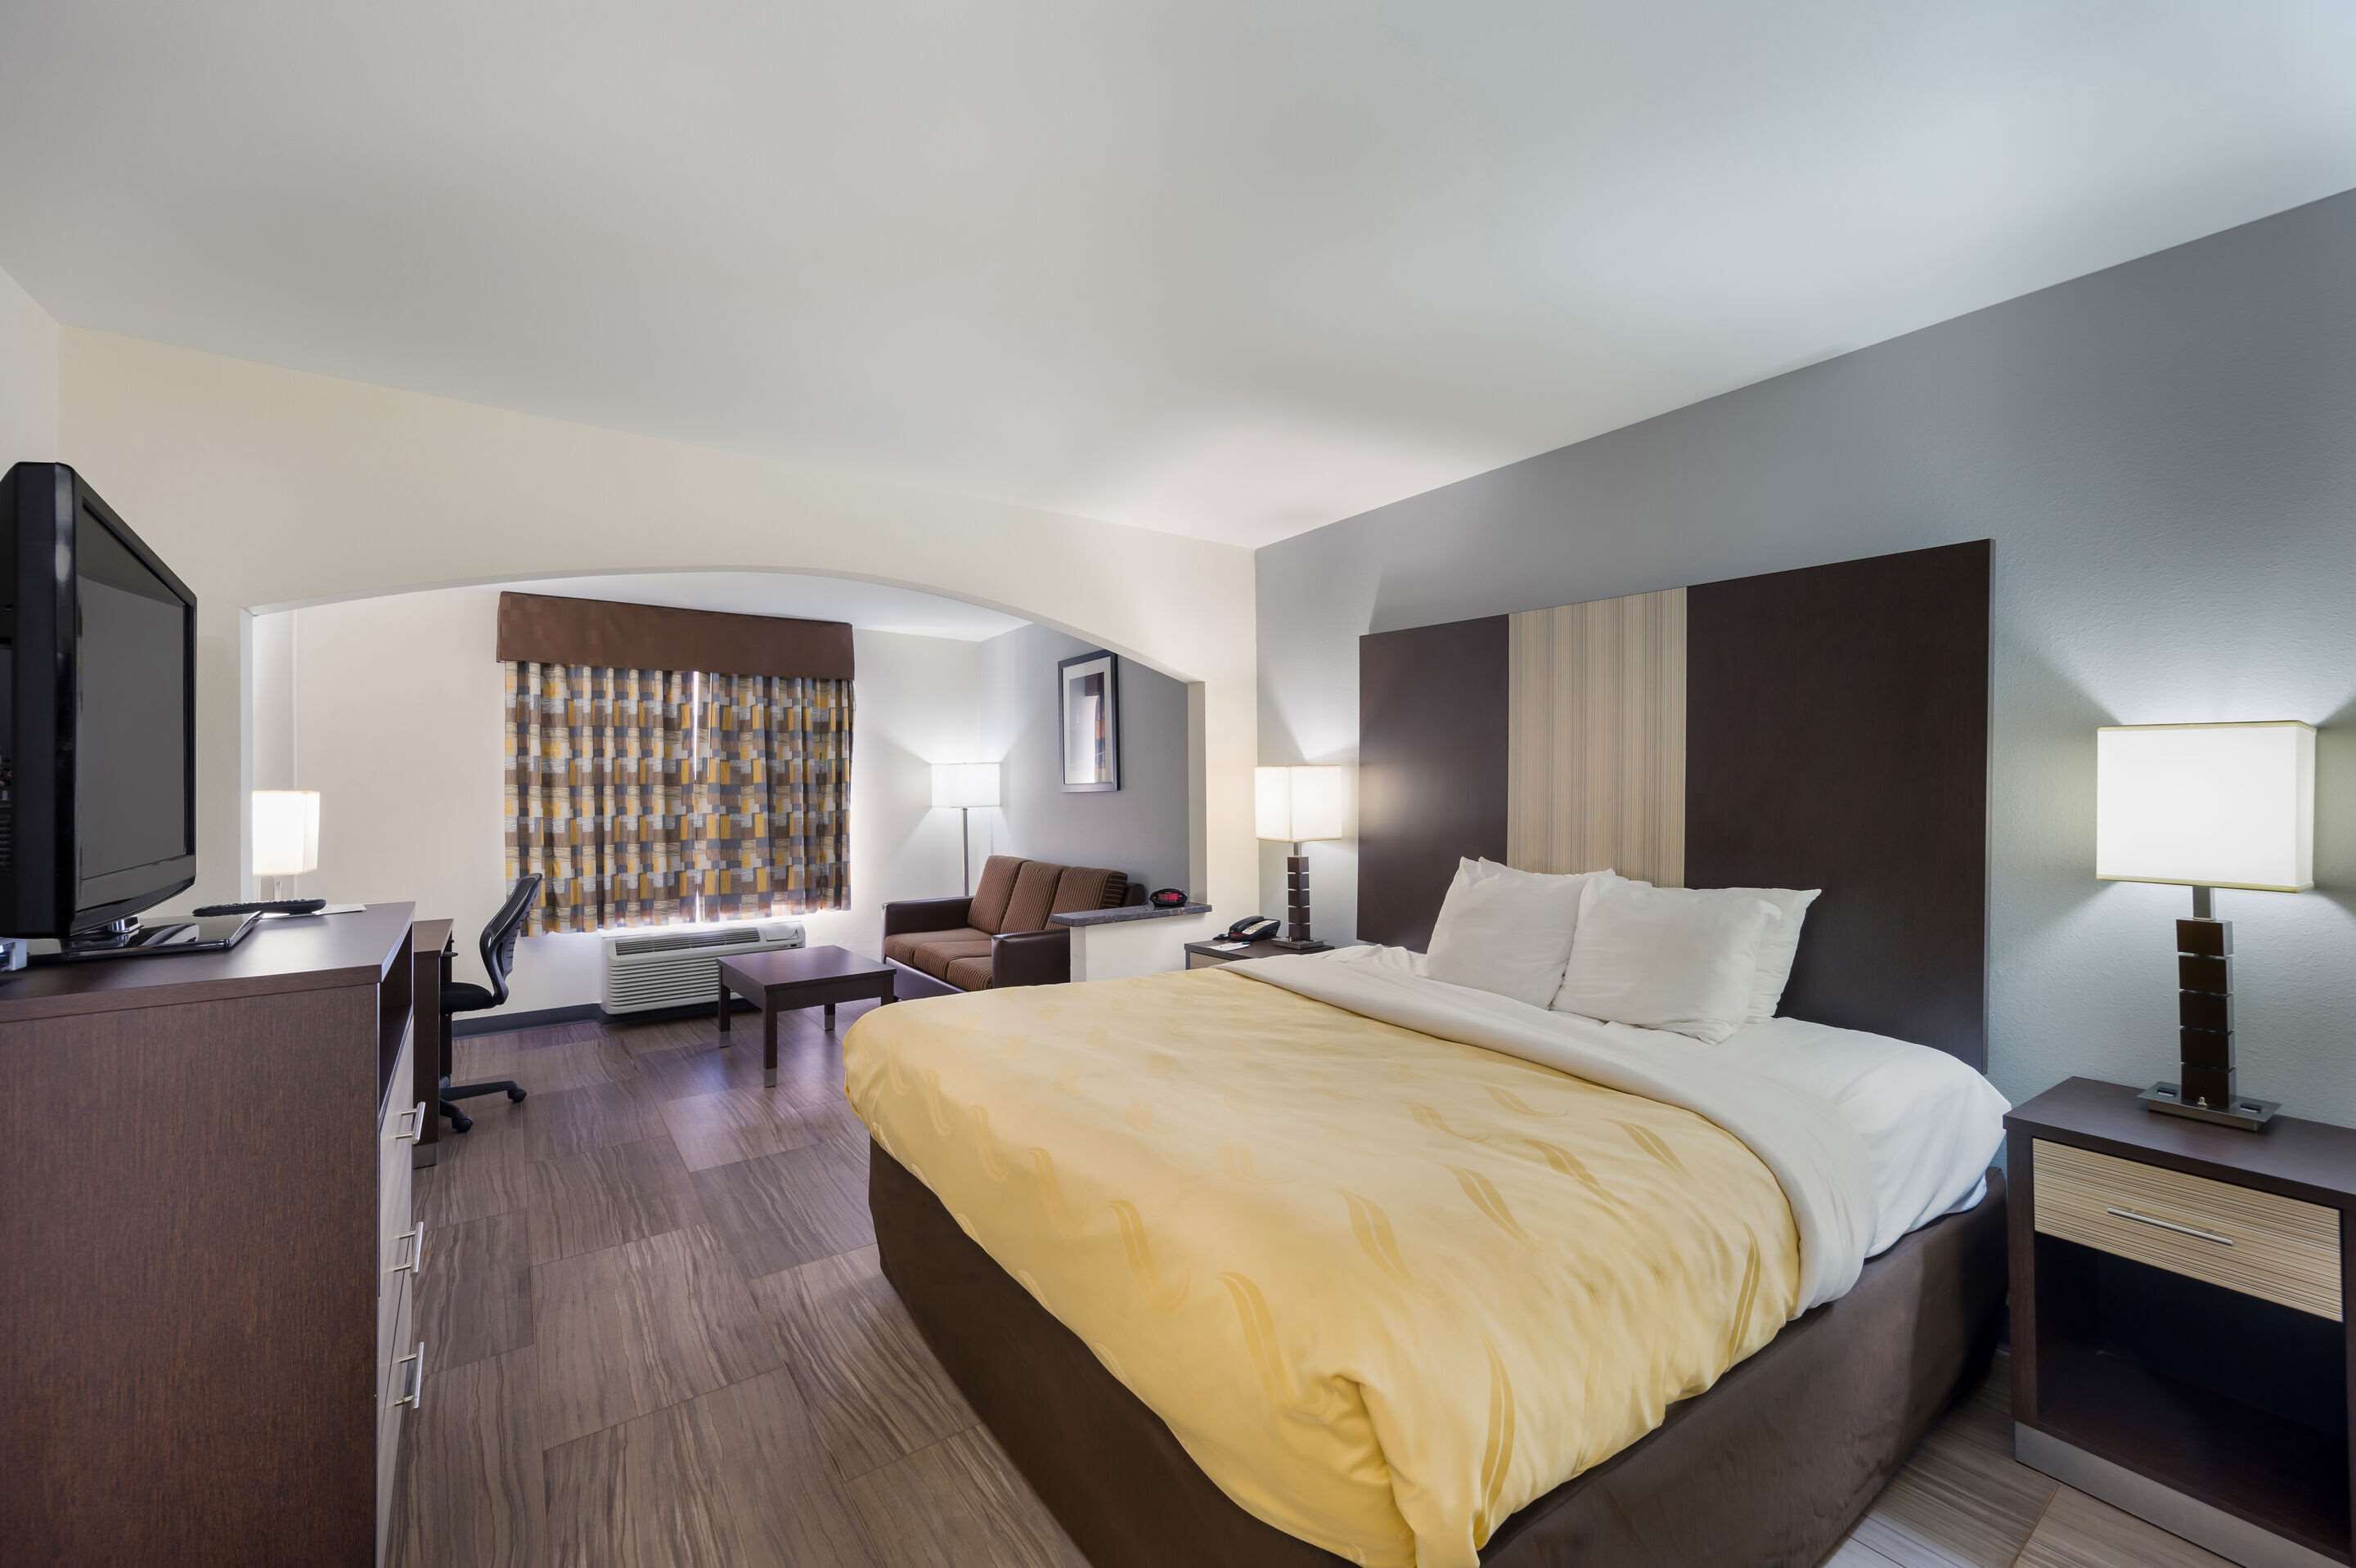 Suite, 1 king bed, Quality Inn & Suites Huntsville Research Park Area